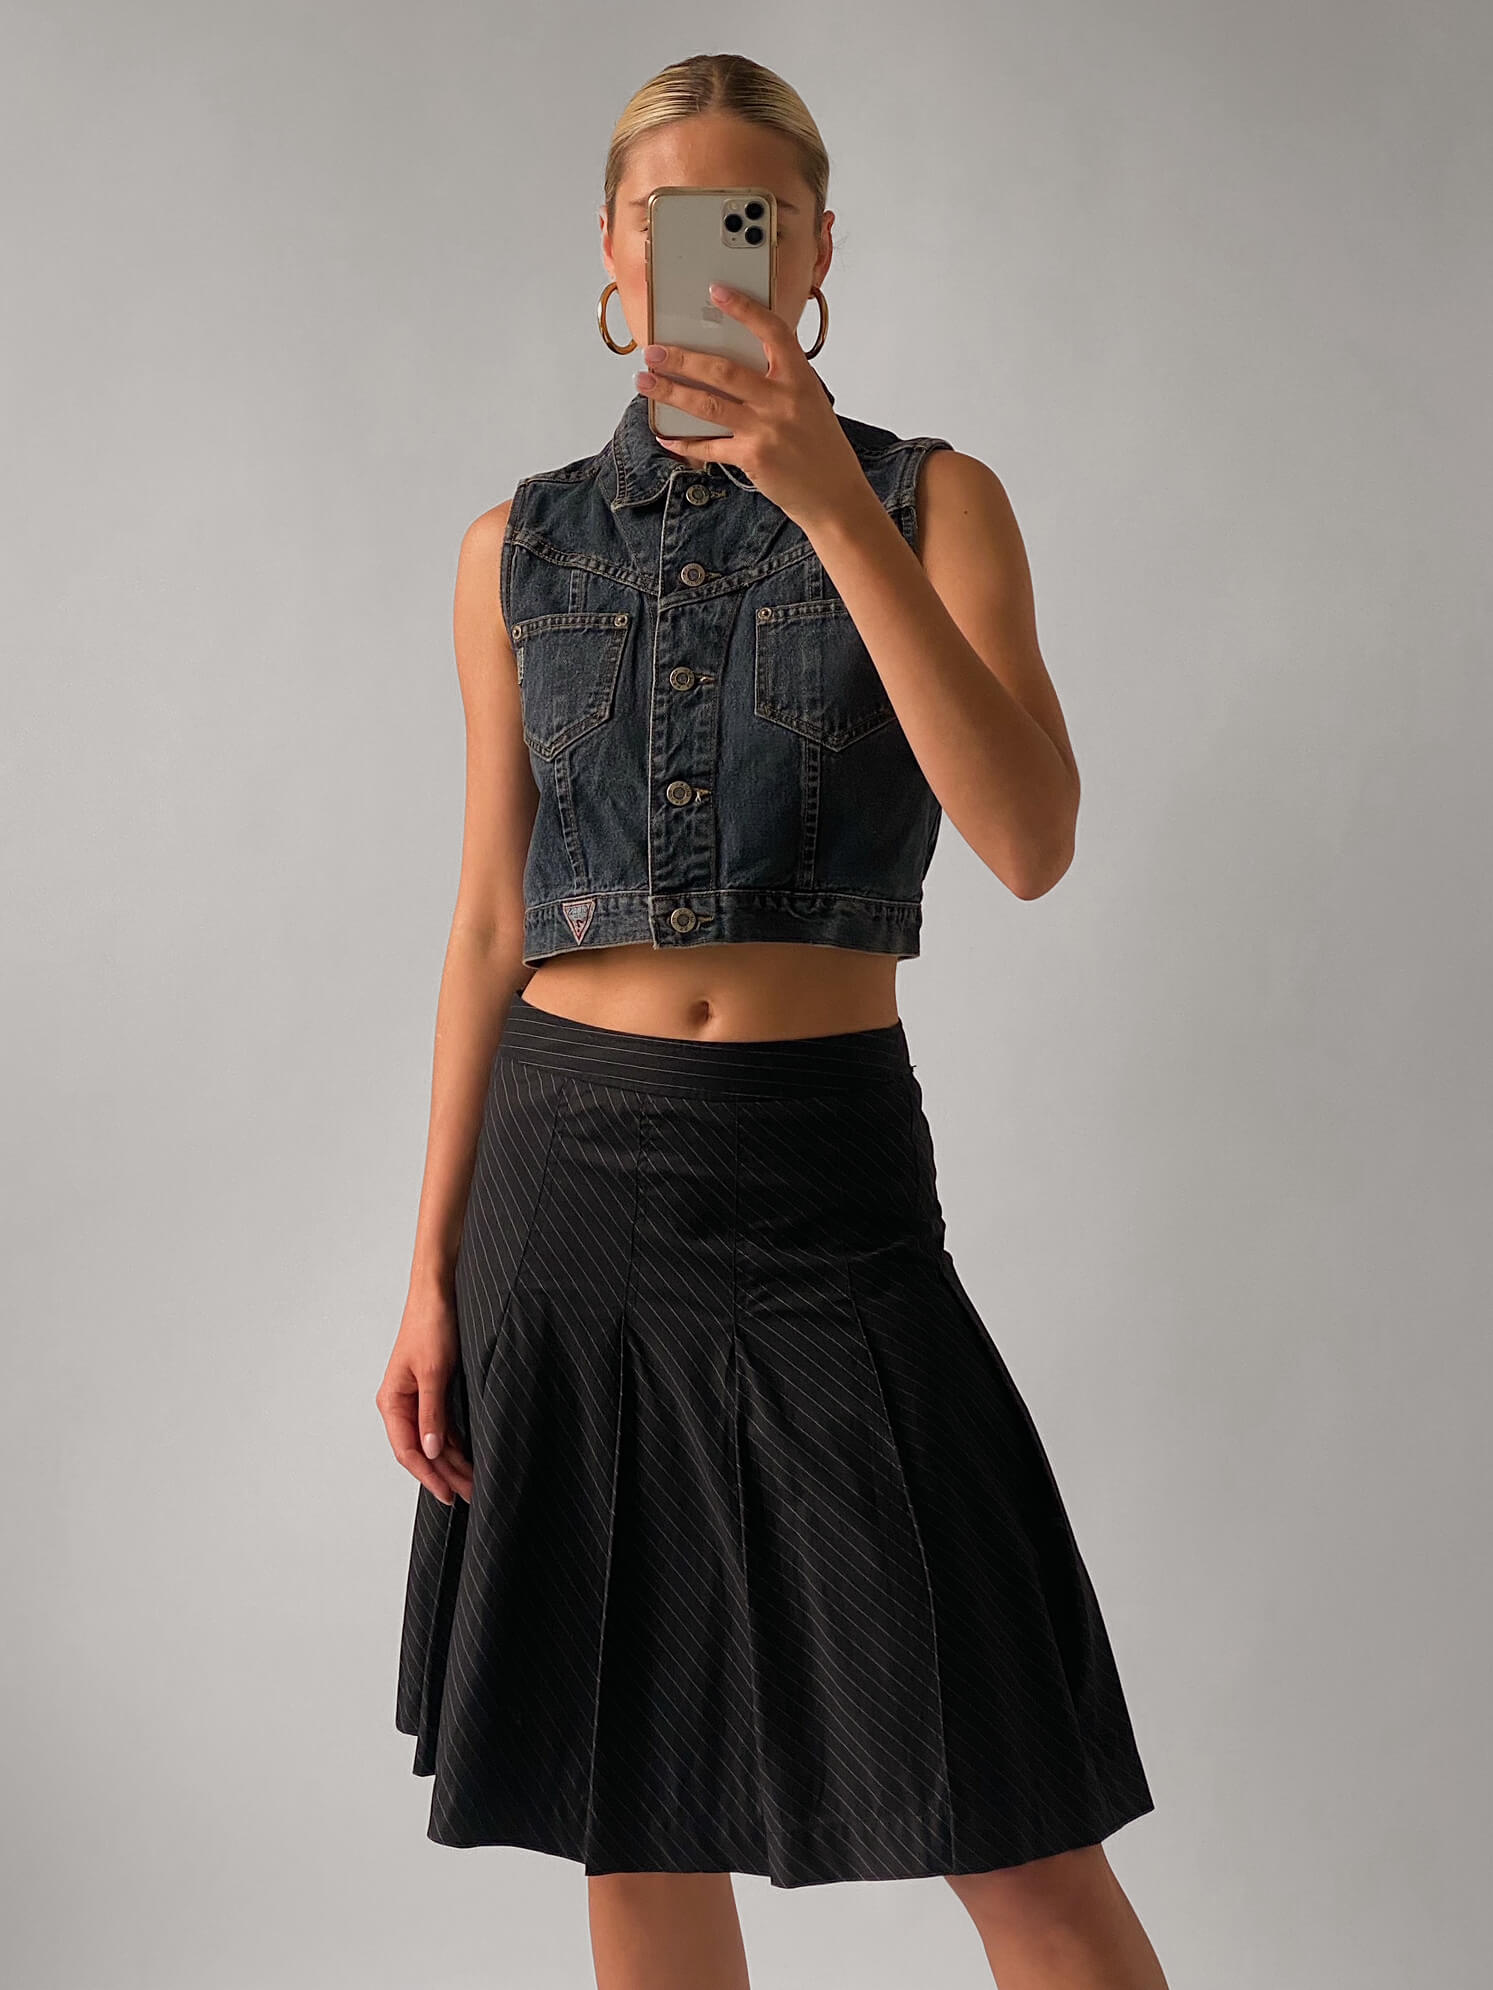 Vintage Pinstripe Flared Skirt | XS/S